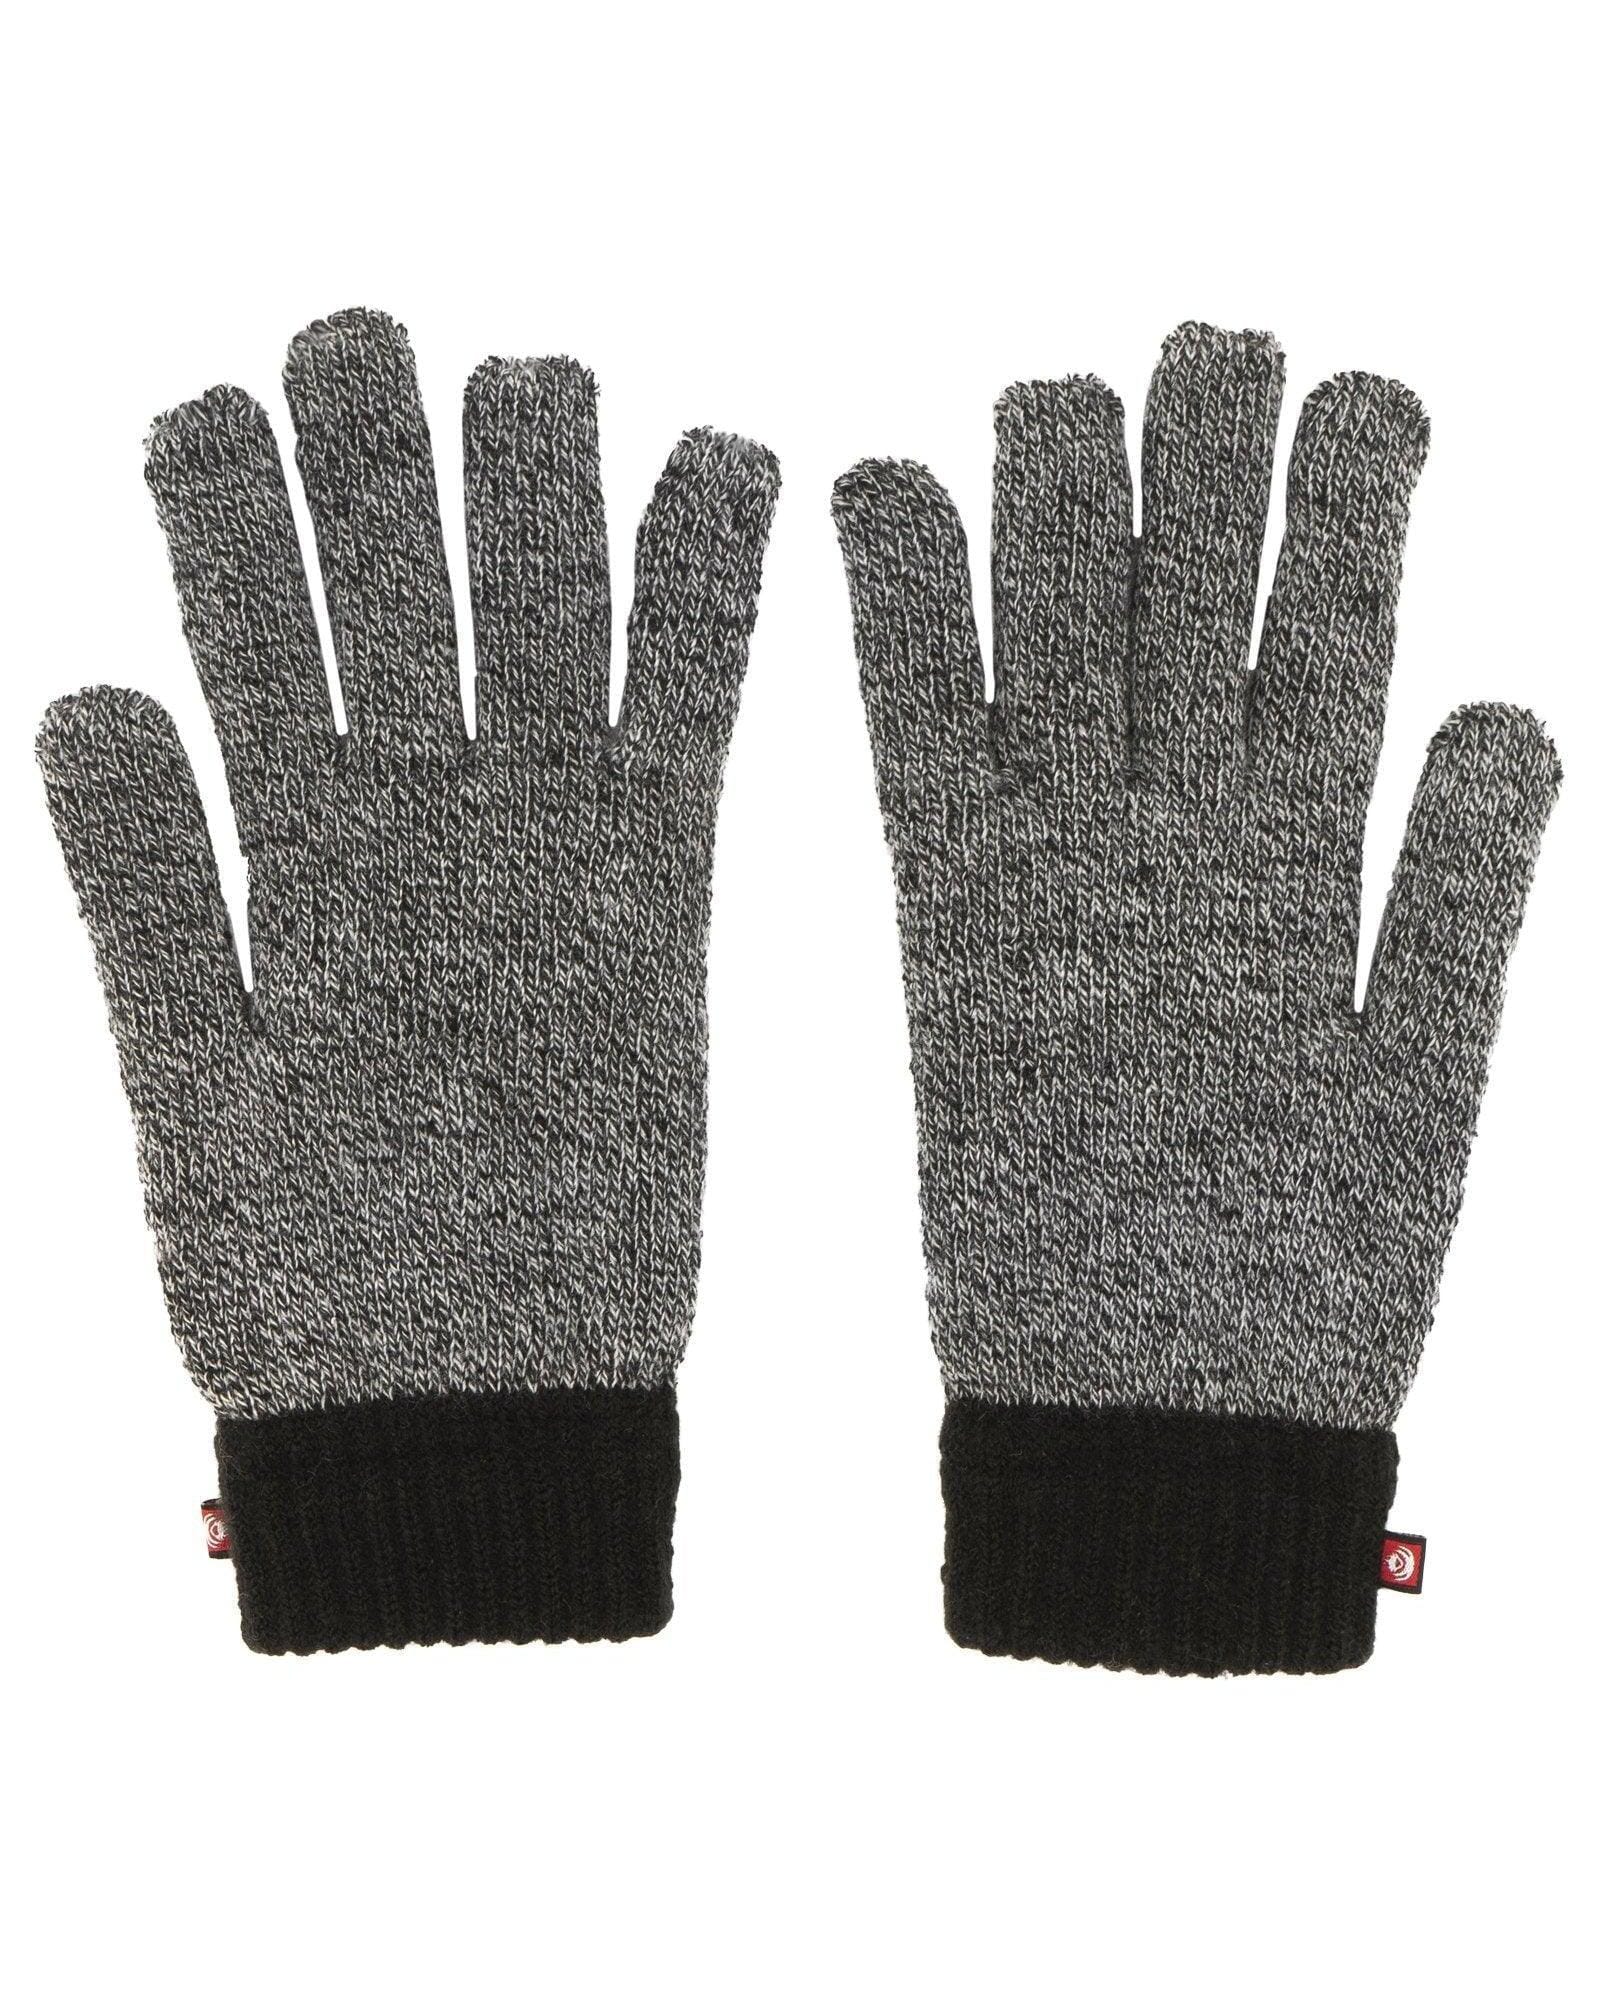 Off Grid - Fleece Lined Gloves - Phantom